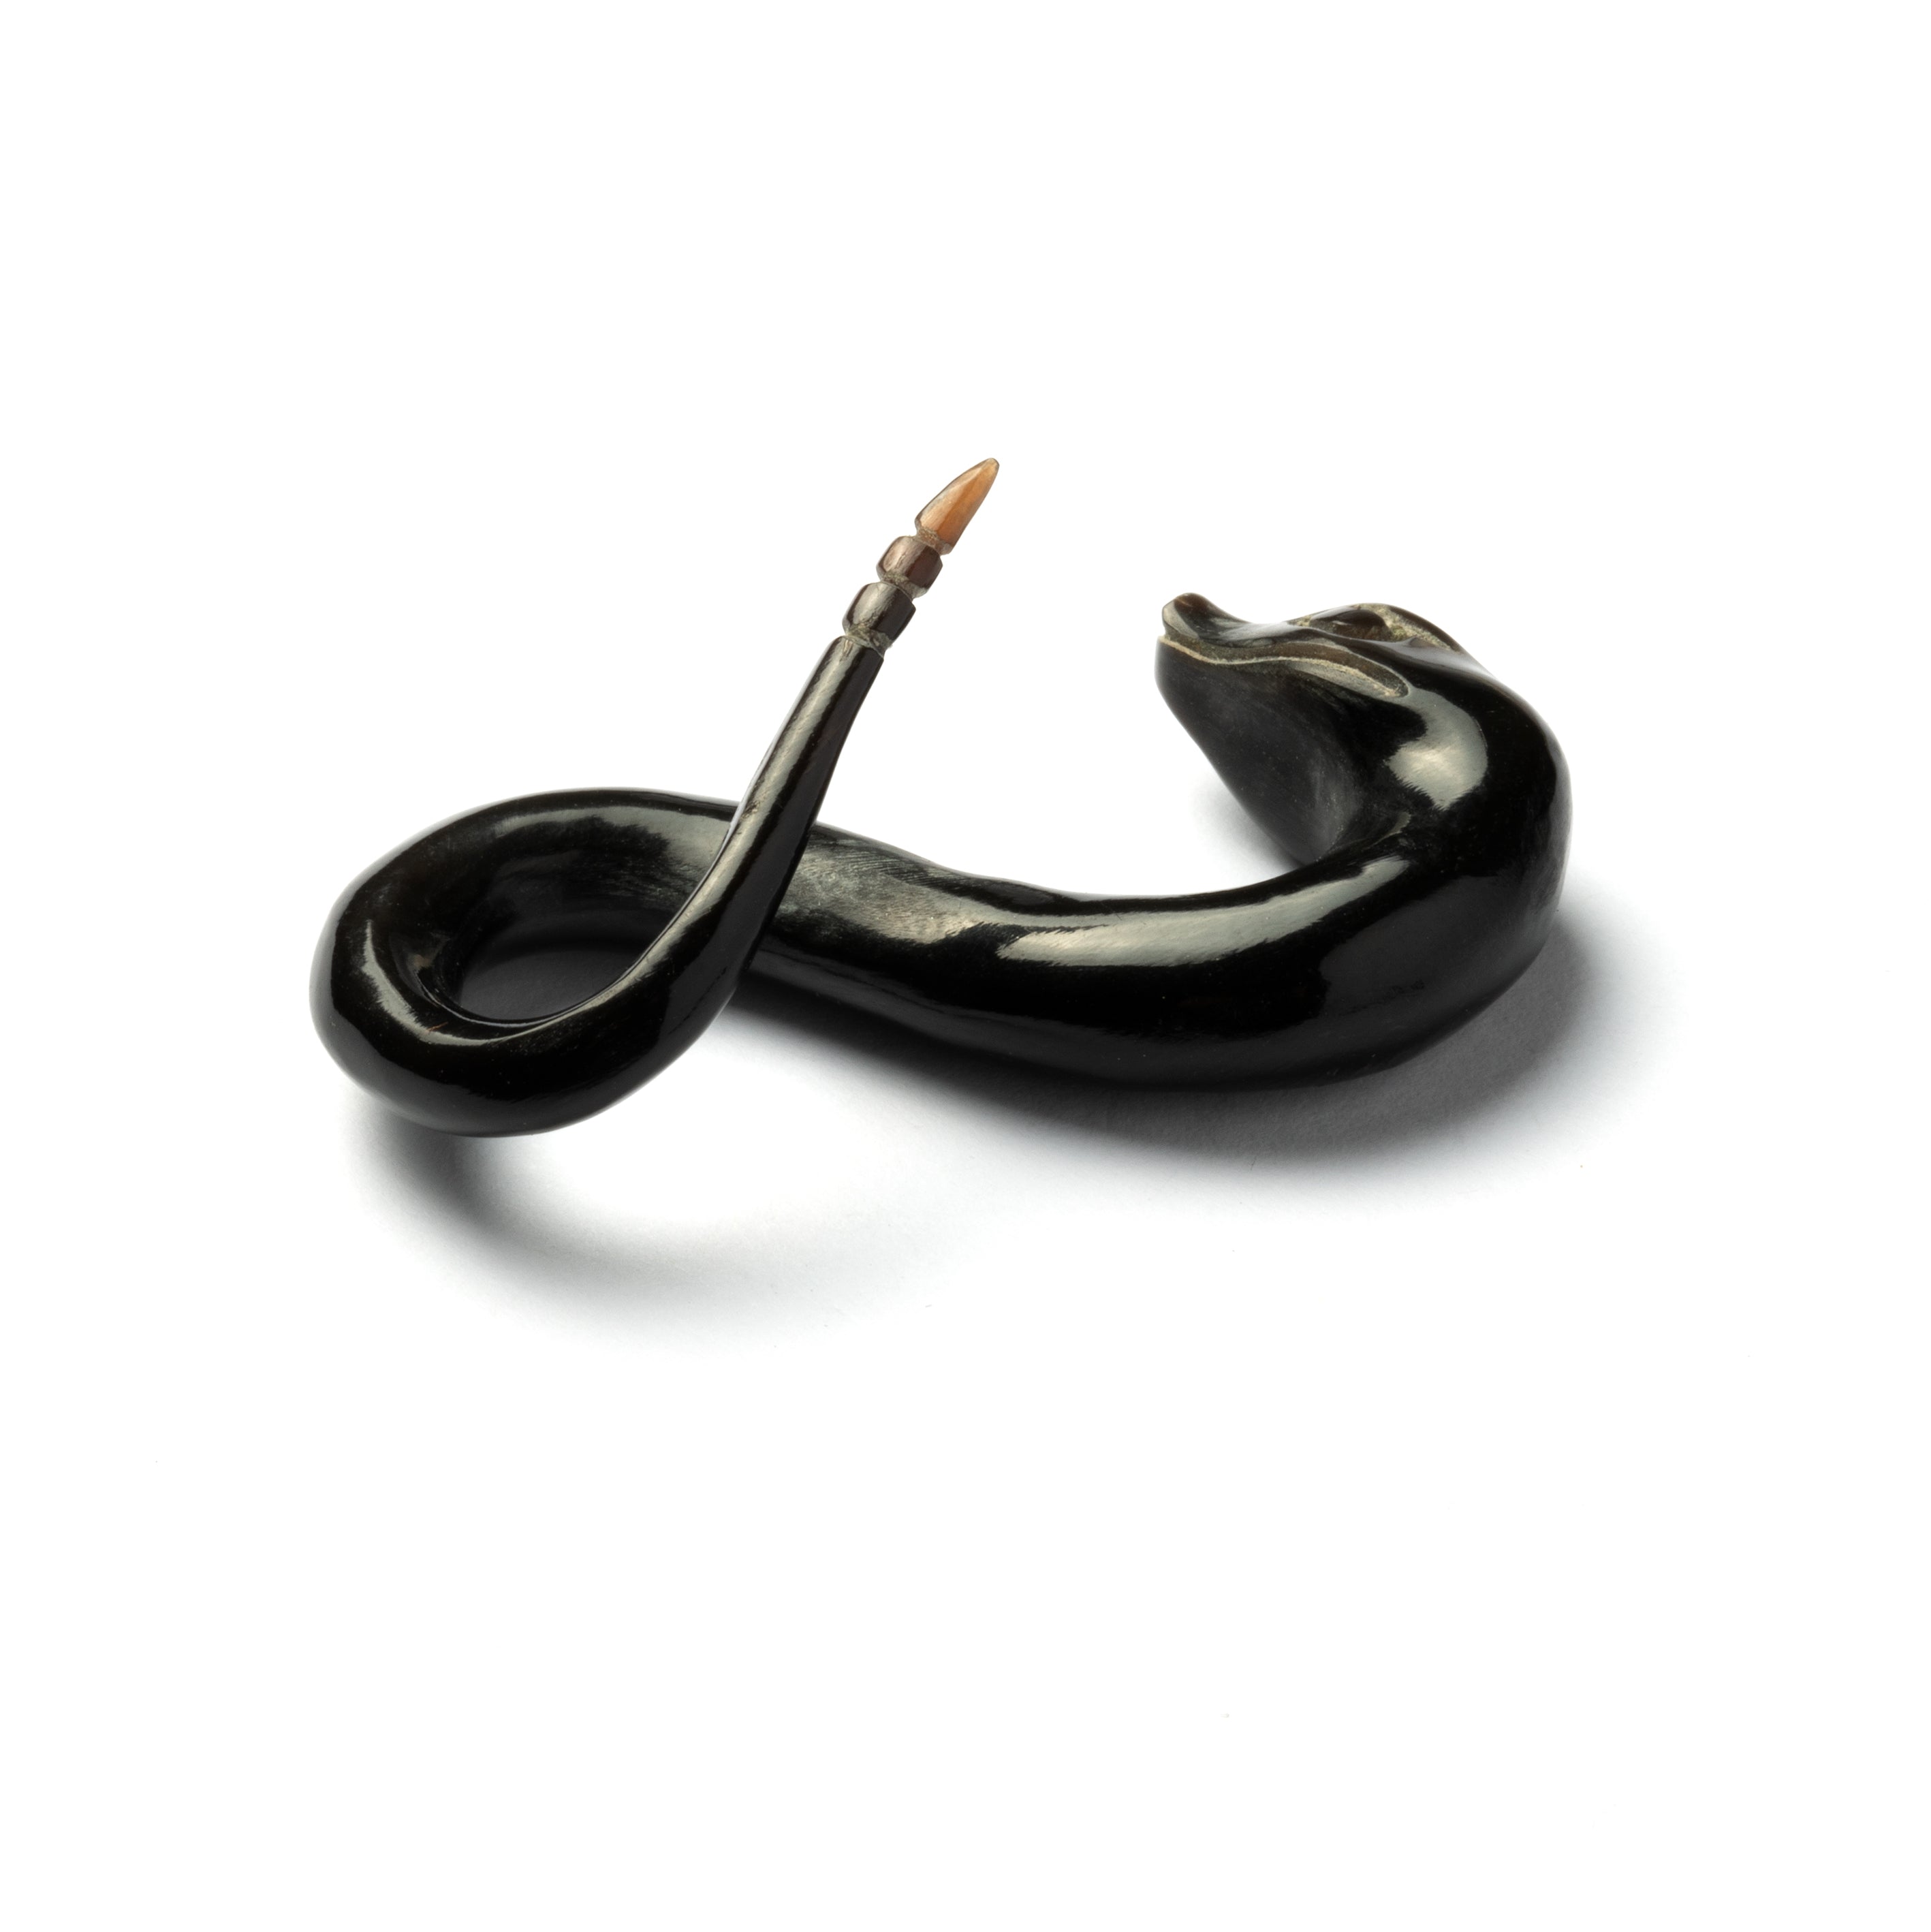 single horn snake ear stretcher in infinity shape back view